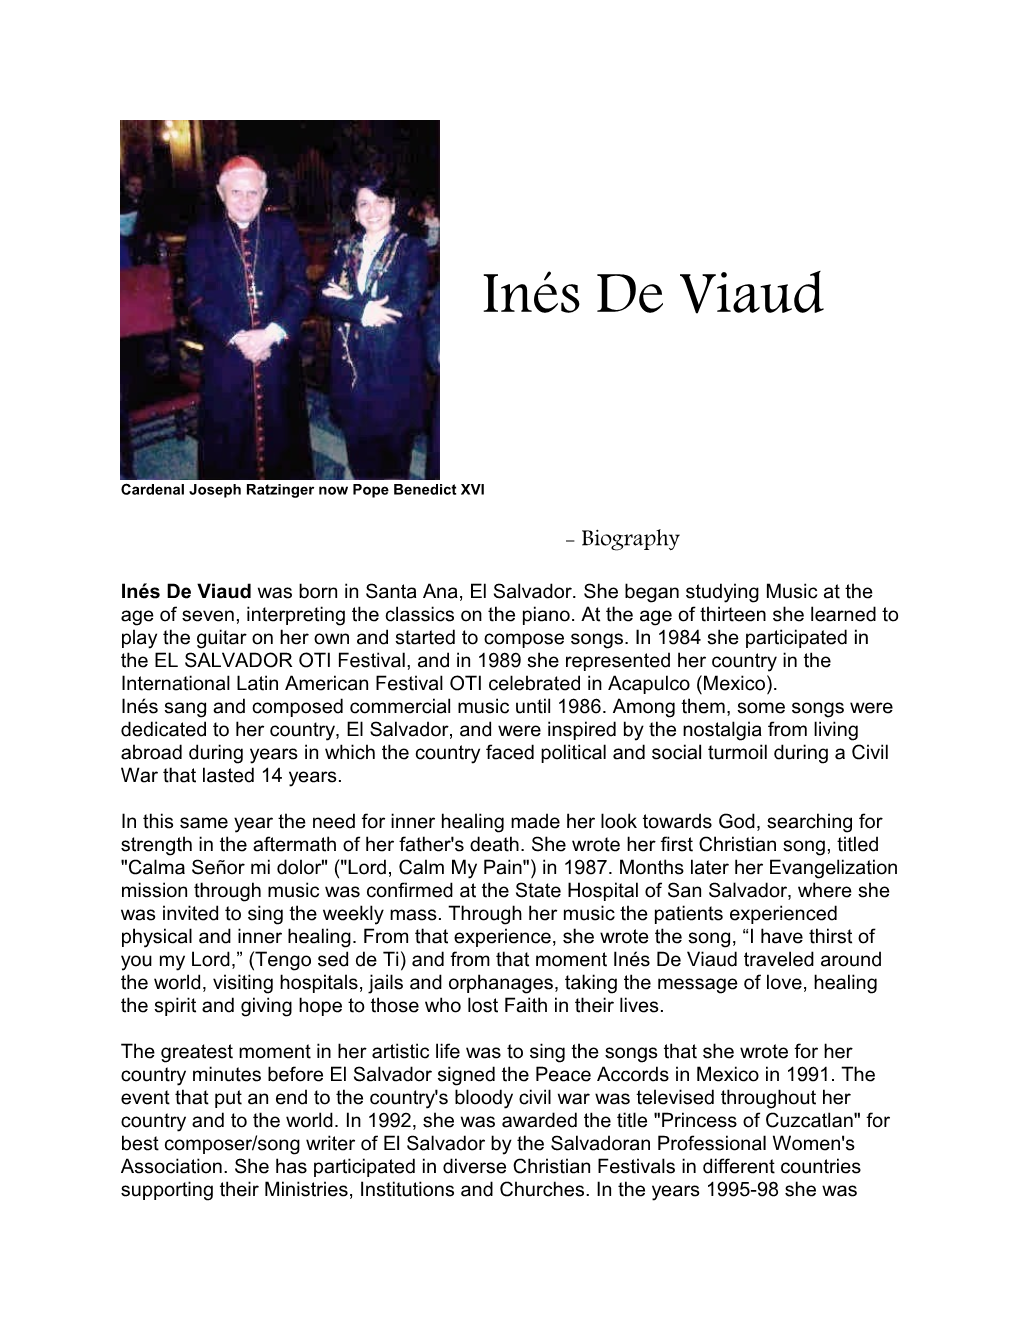 Inés De Viaud Biography